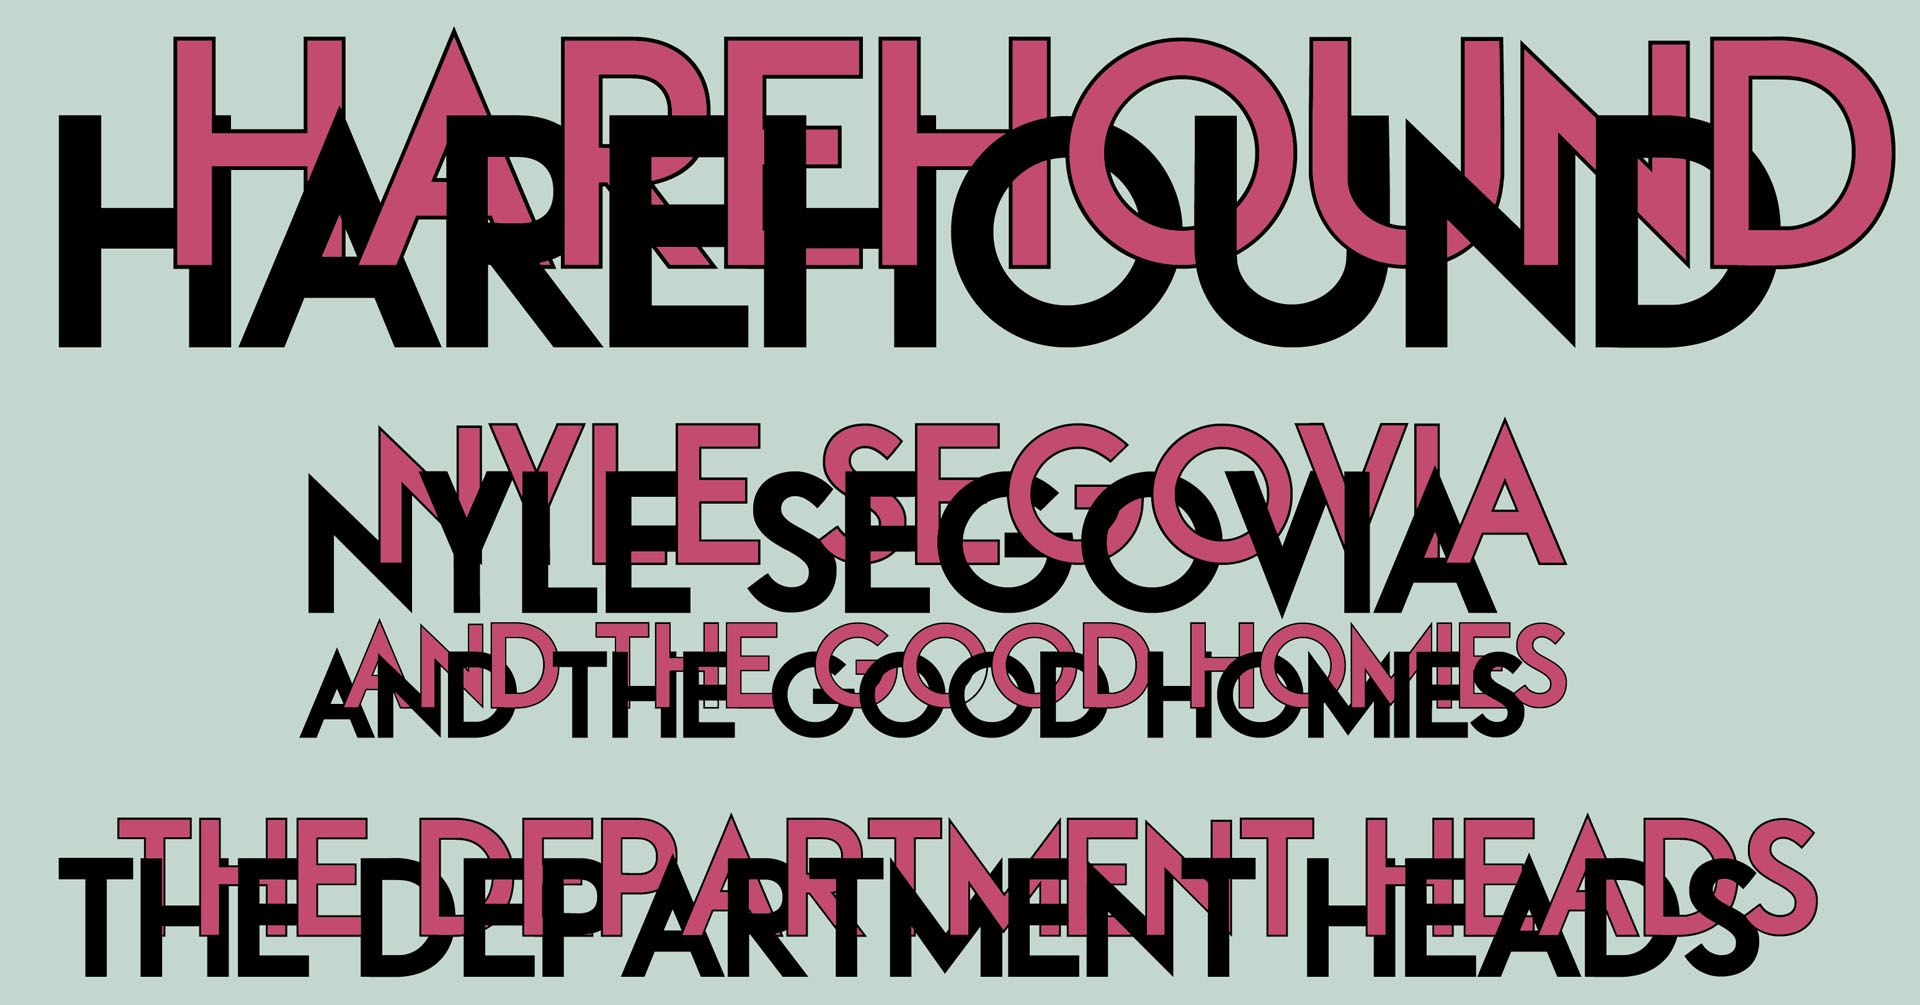 Harehound, Nyle Segovia and the Good Homies, The Department Heads